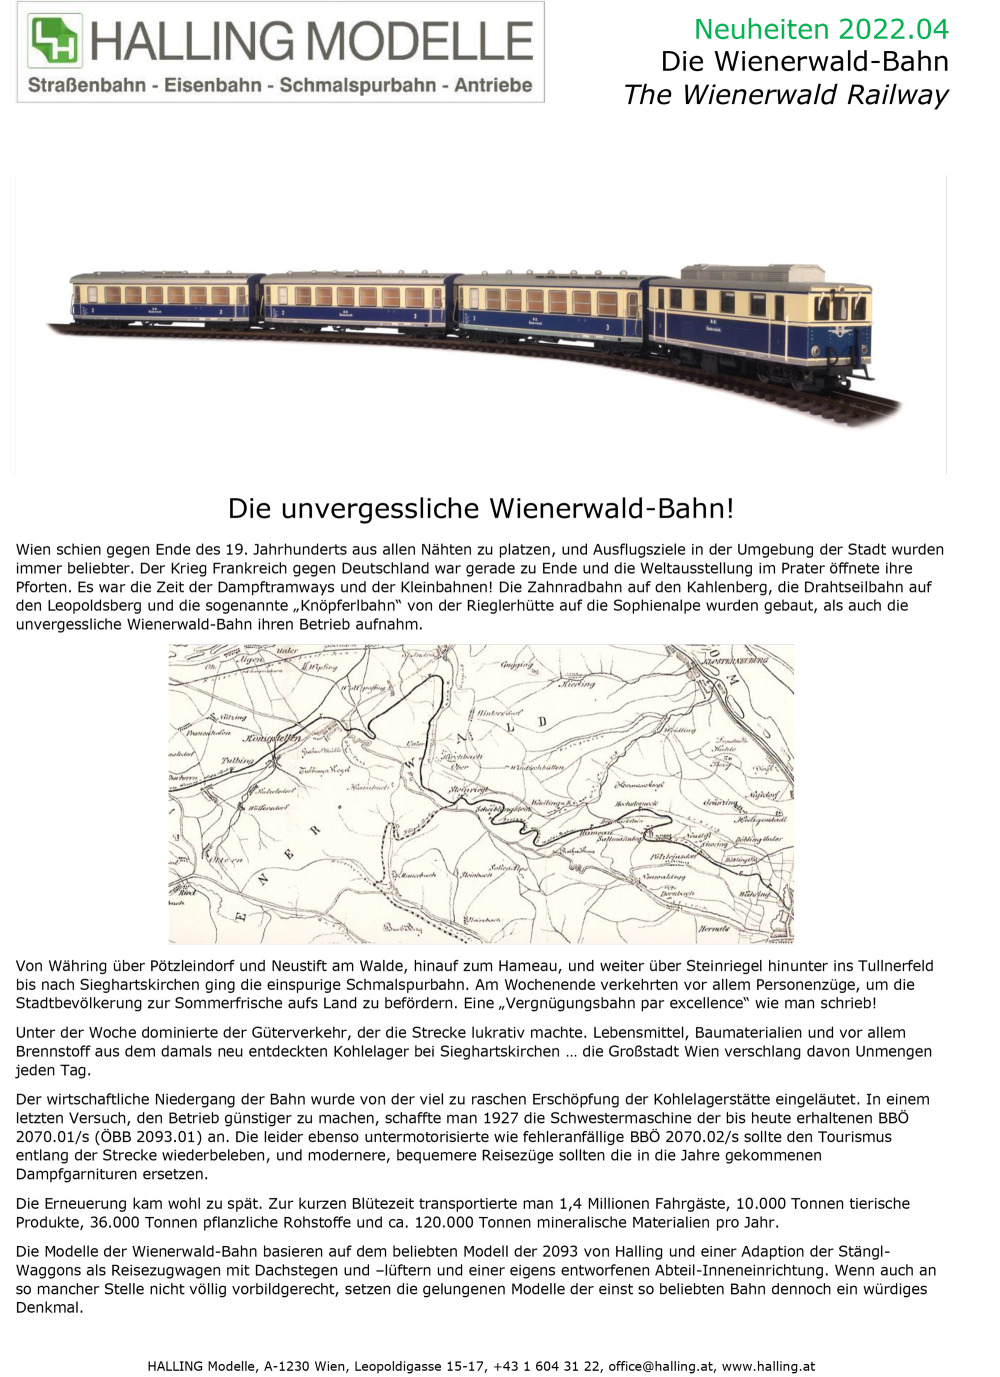 Halling Modelle - The Wienerwald Railway